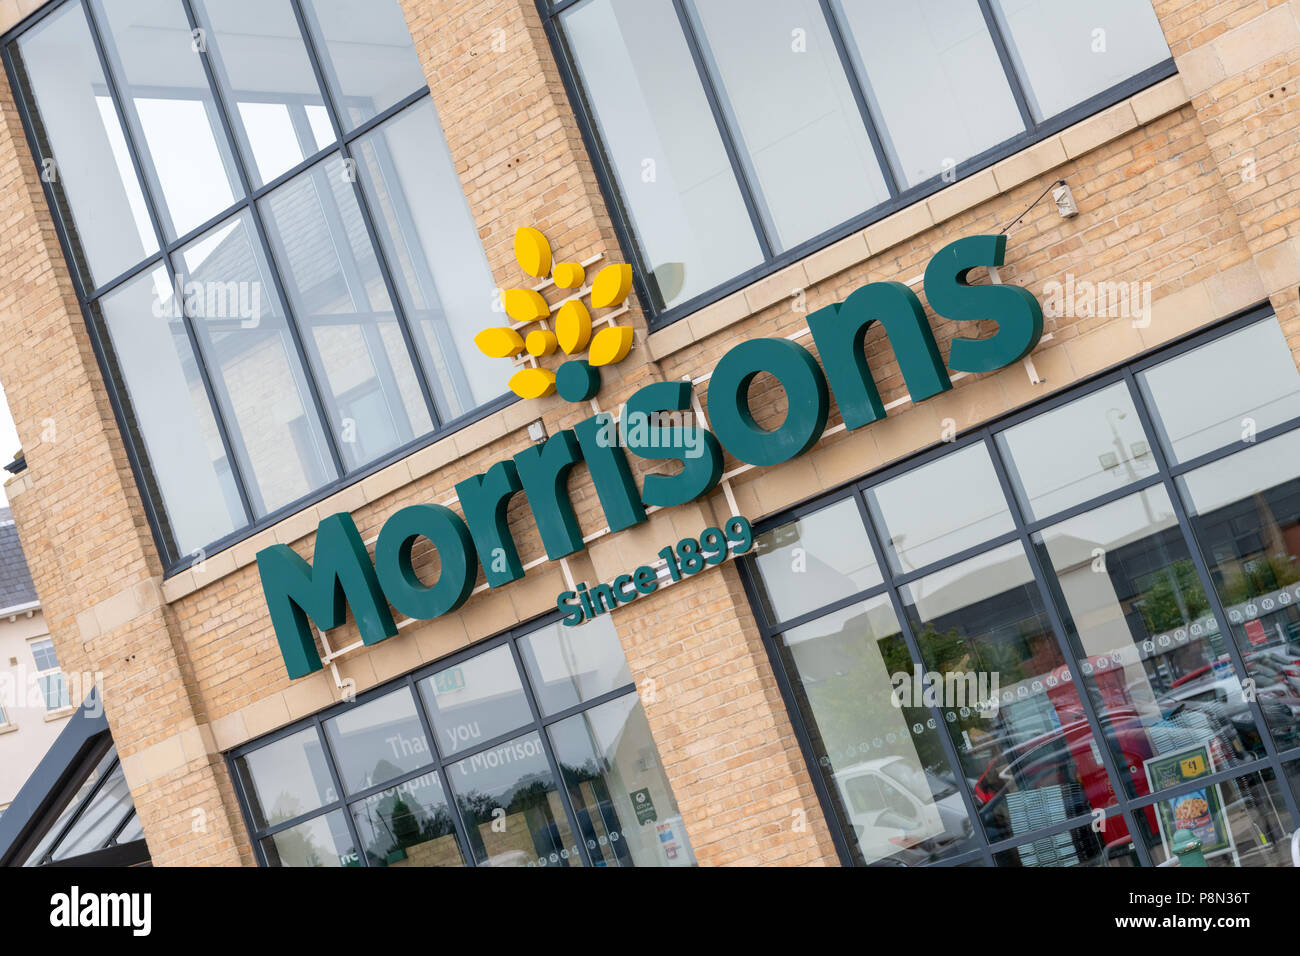 Morrison's supermarket in the new village of Cambourne, South Cambridgeshire, Cambridgeshire, UK Stock Photo